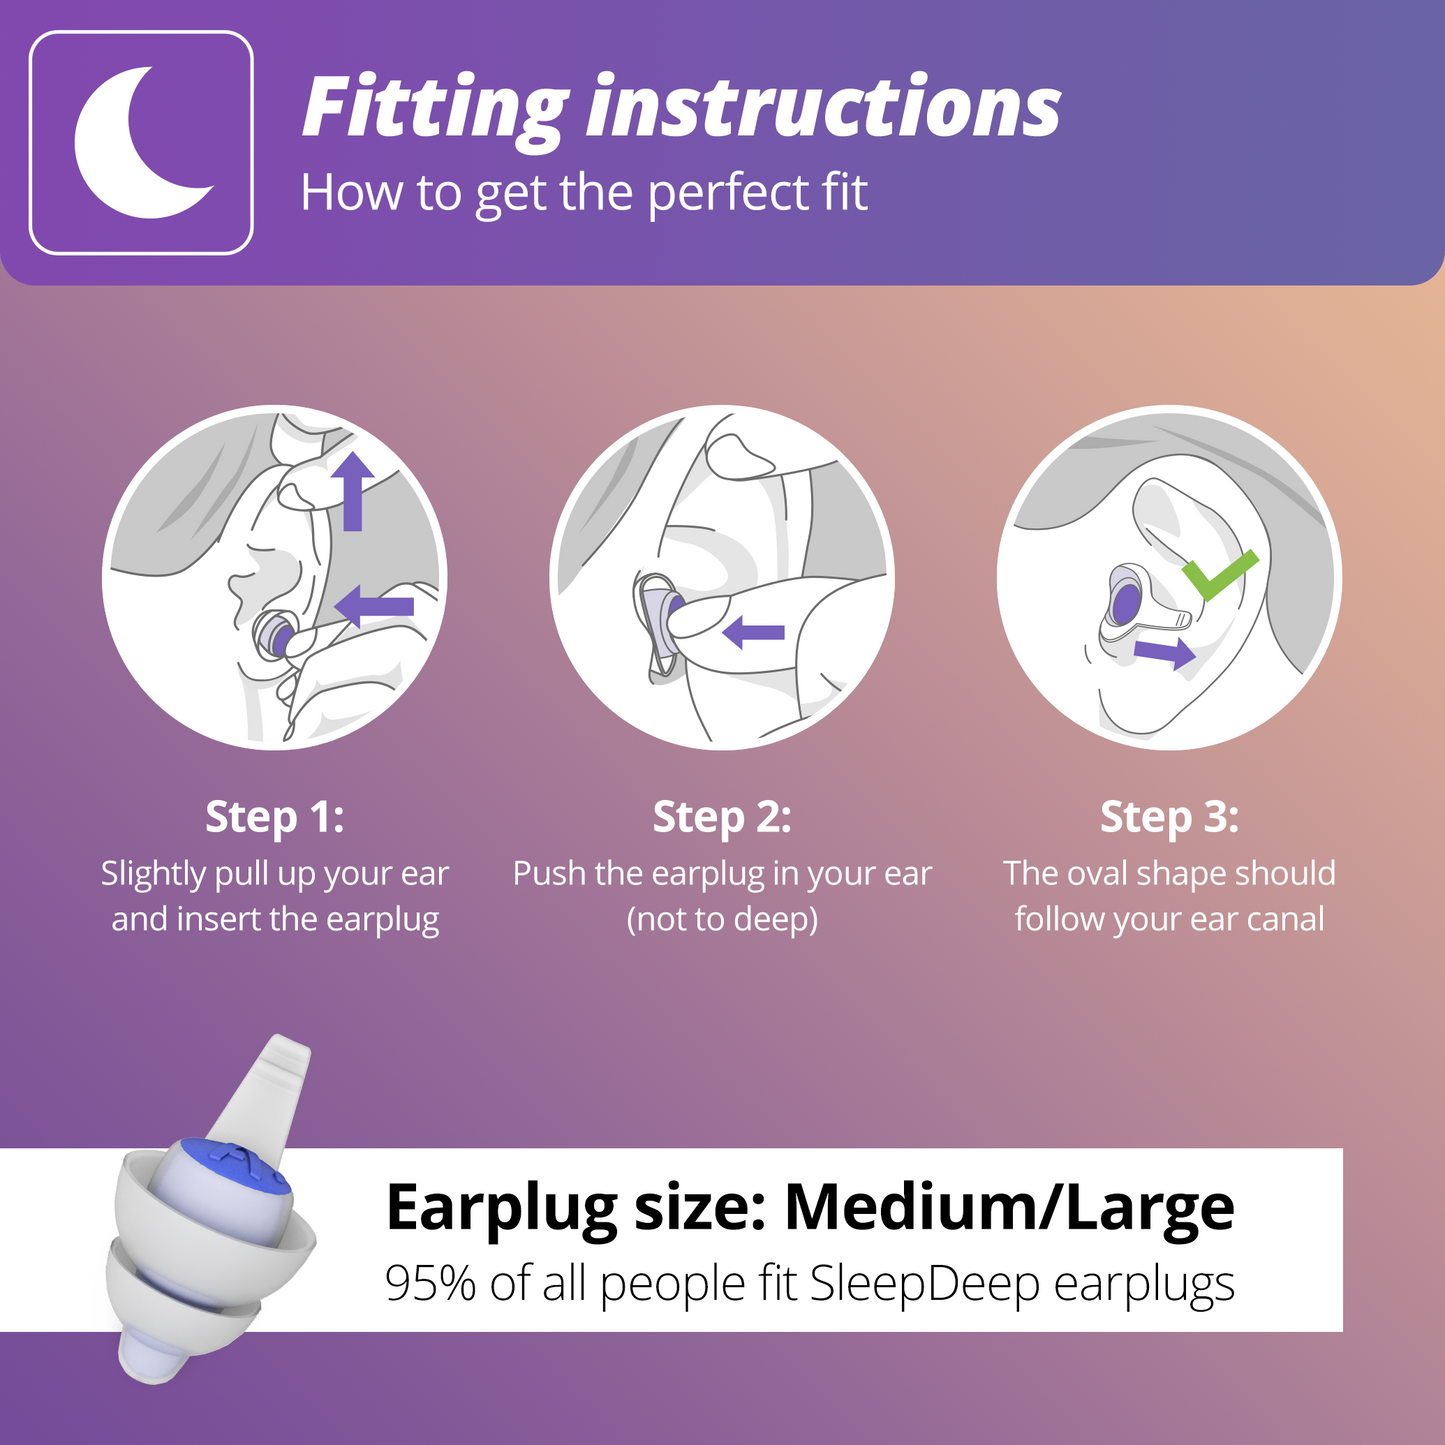 SleepDeep fitting – Alpine Hearing Protection